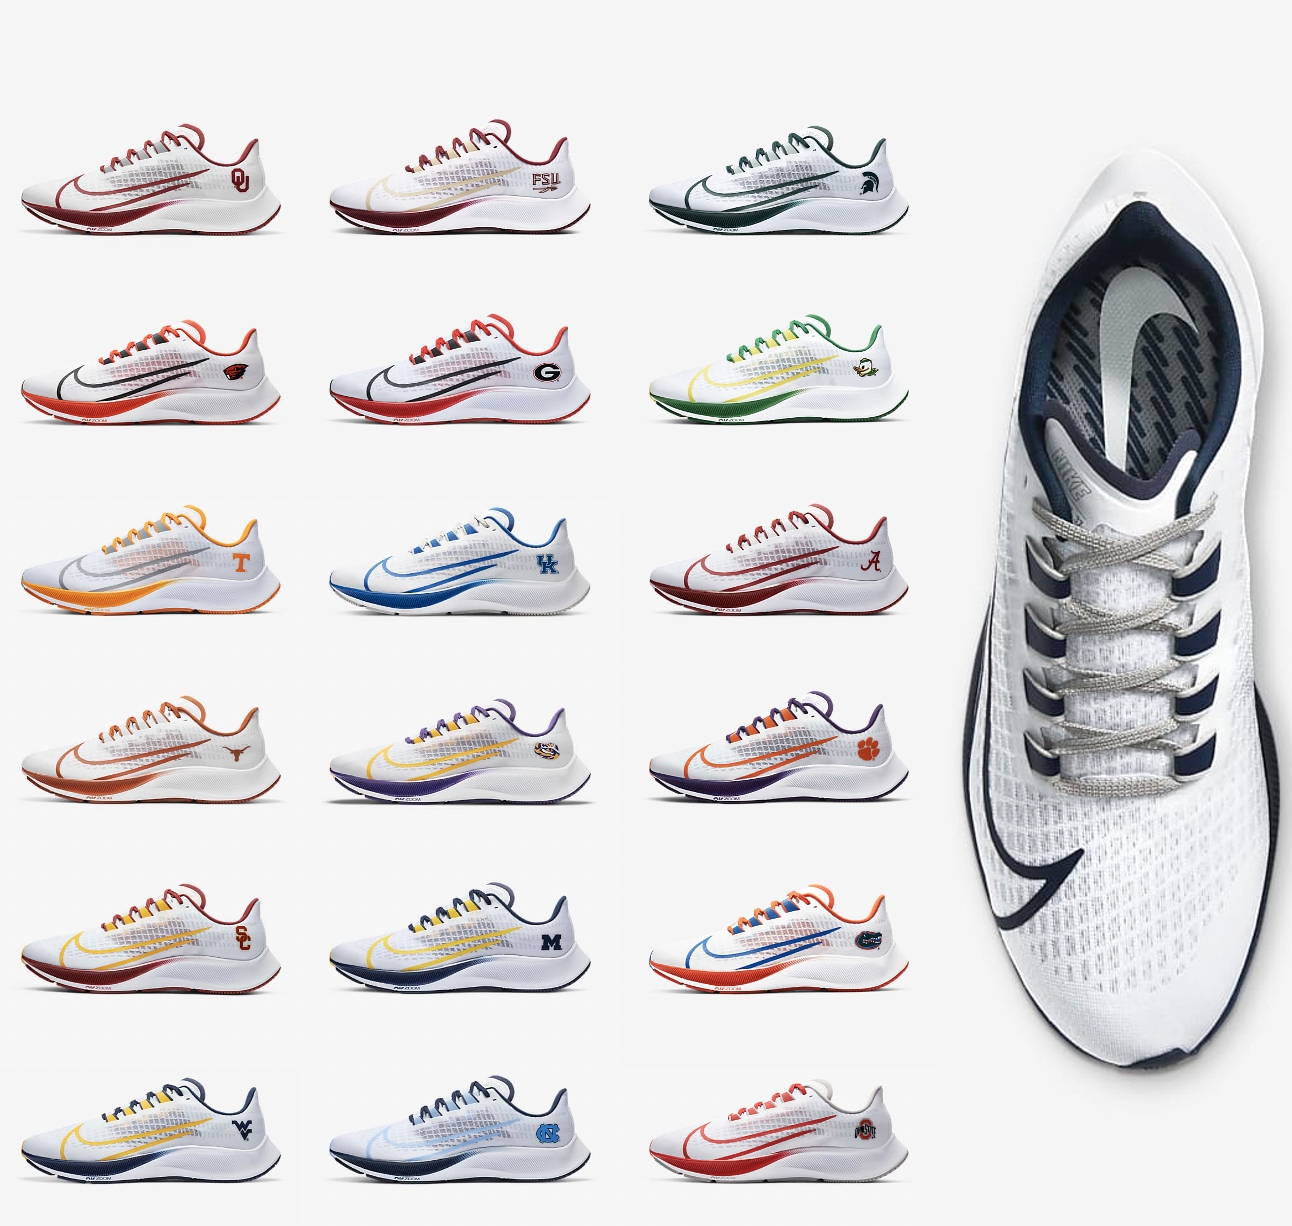 New Nike 2020 College Theme Sneakers 